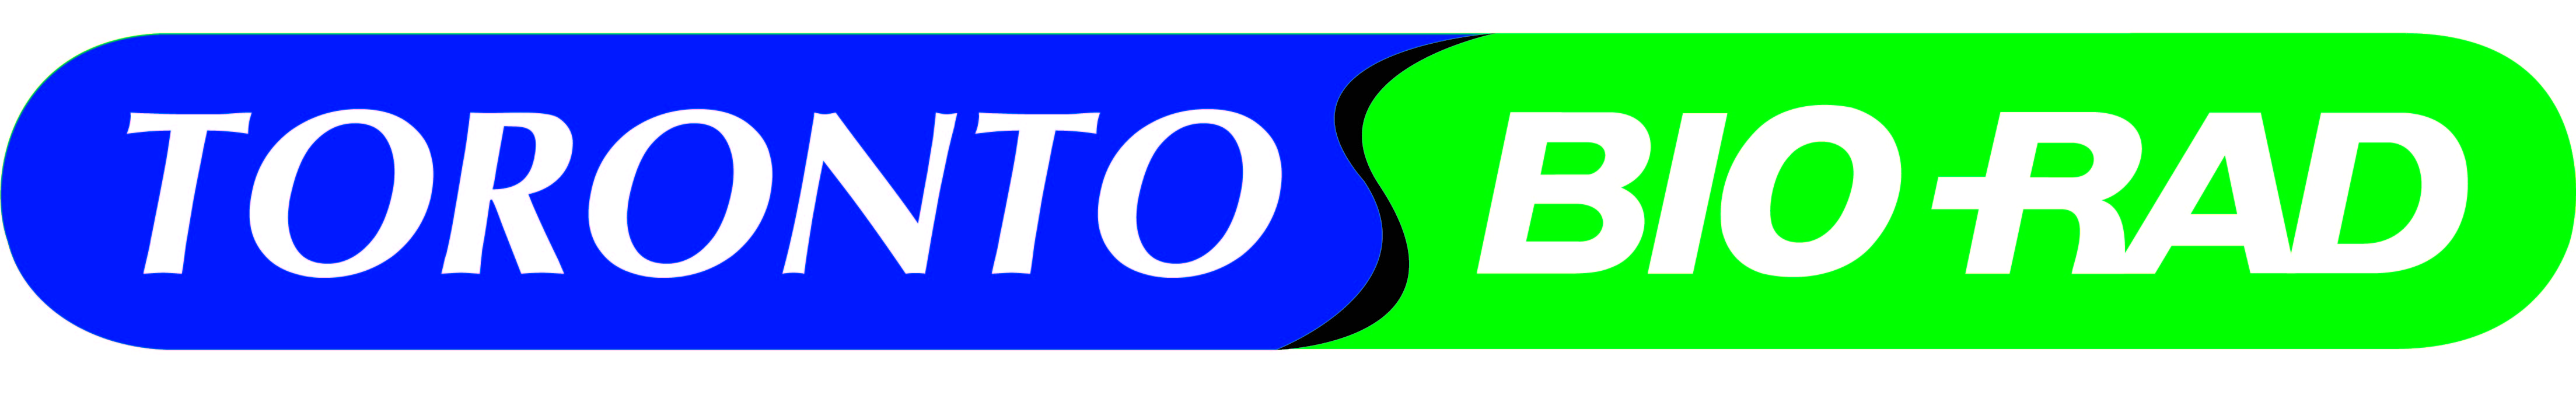 Toronto logo.jpg